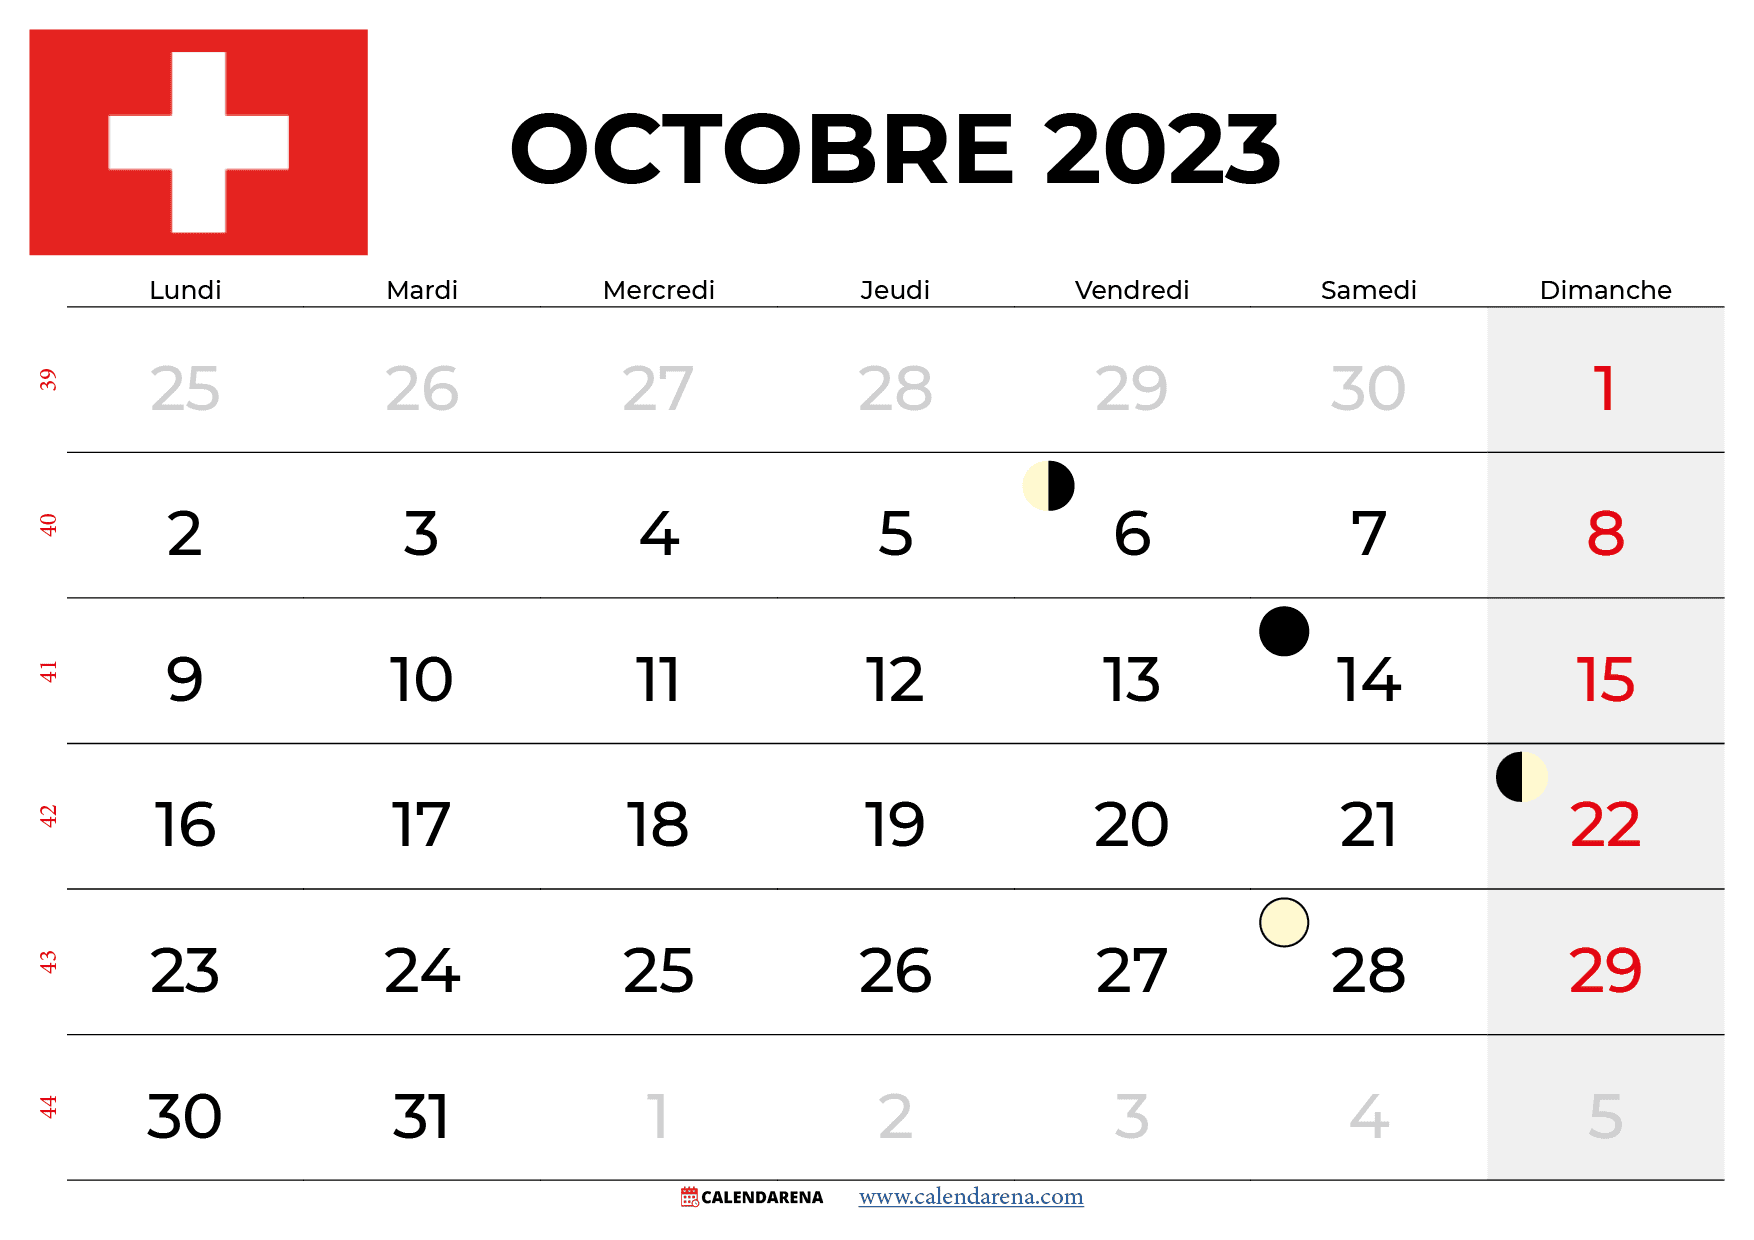 calendrier octobre 2023 suisse